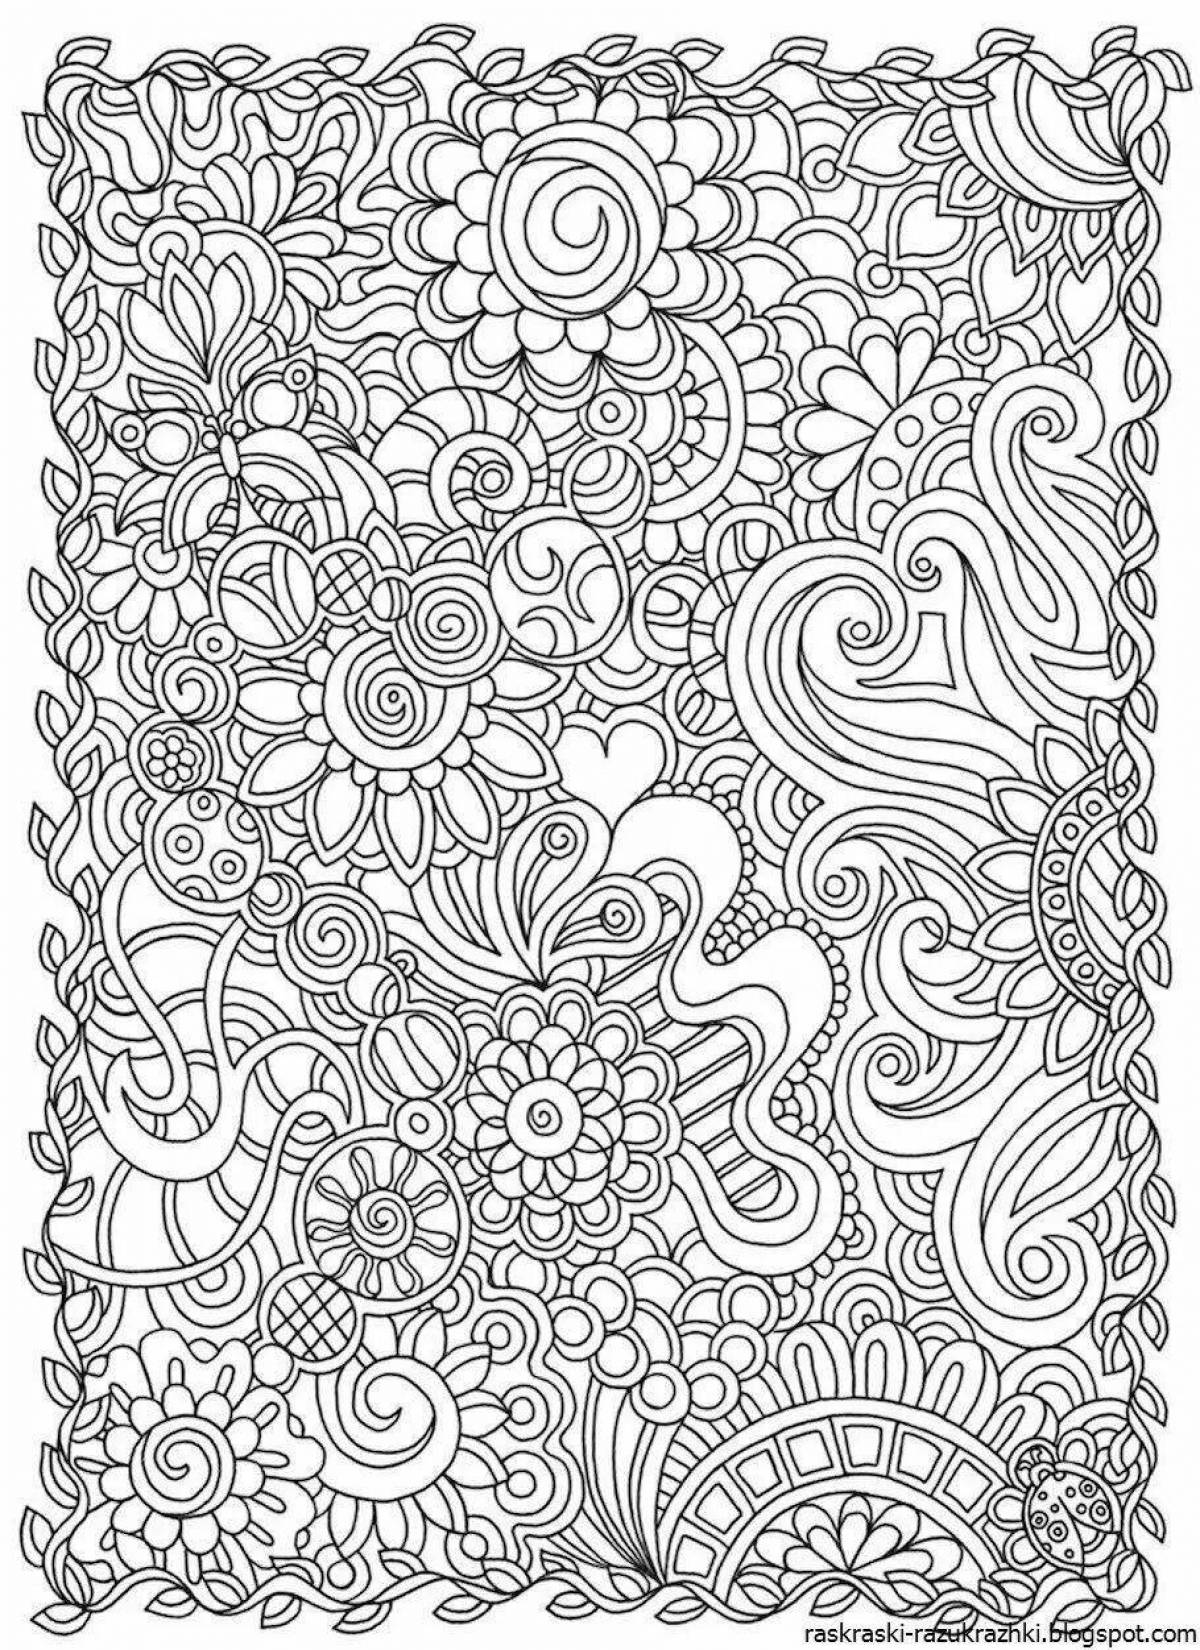 Hypnotic anti-stress coloring book